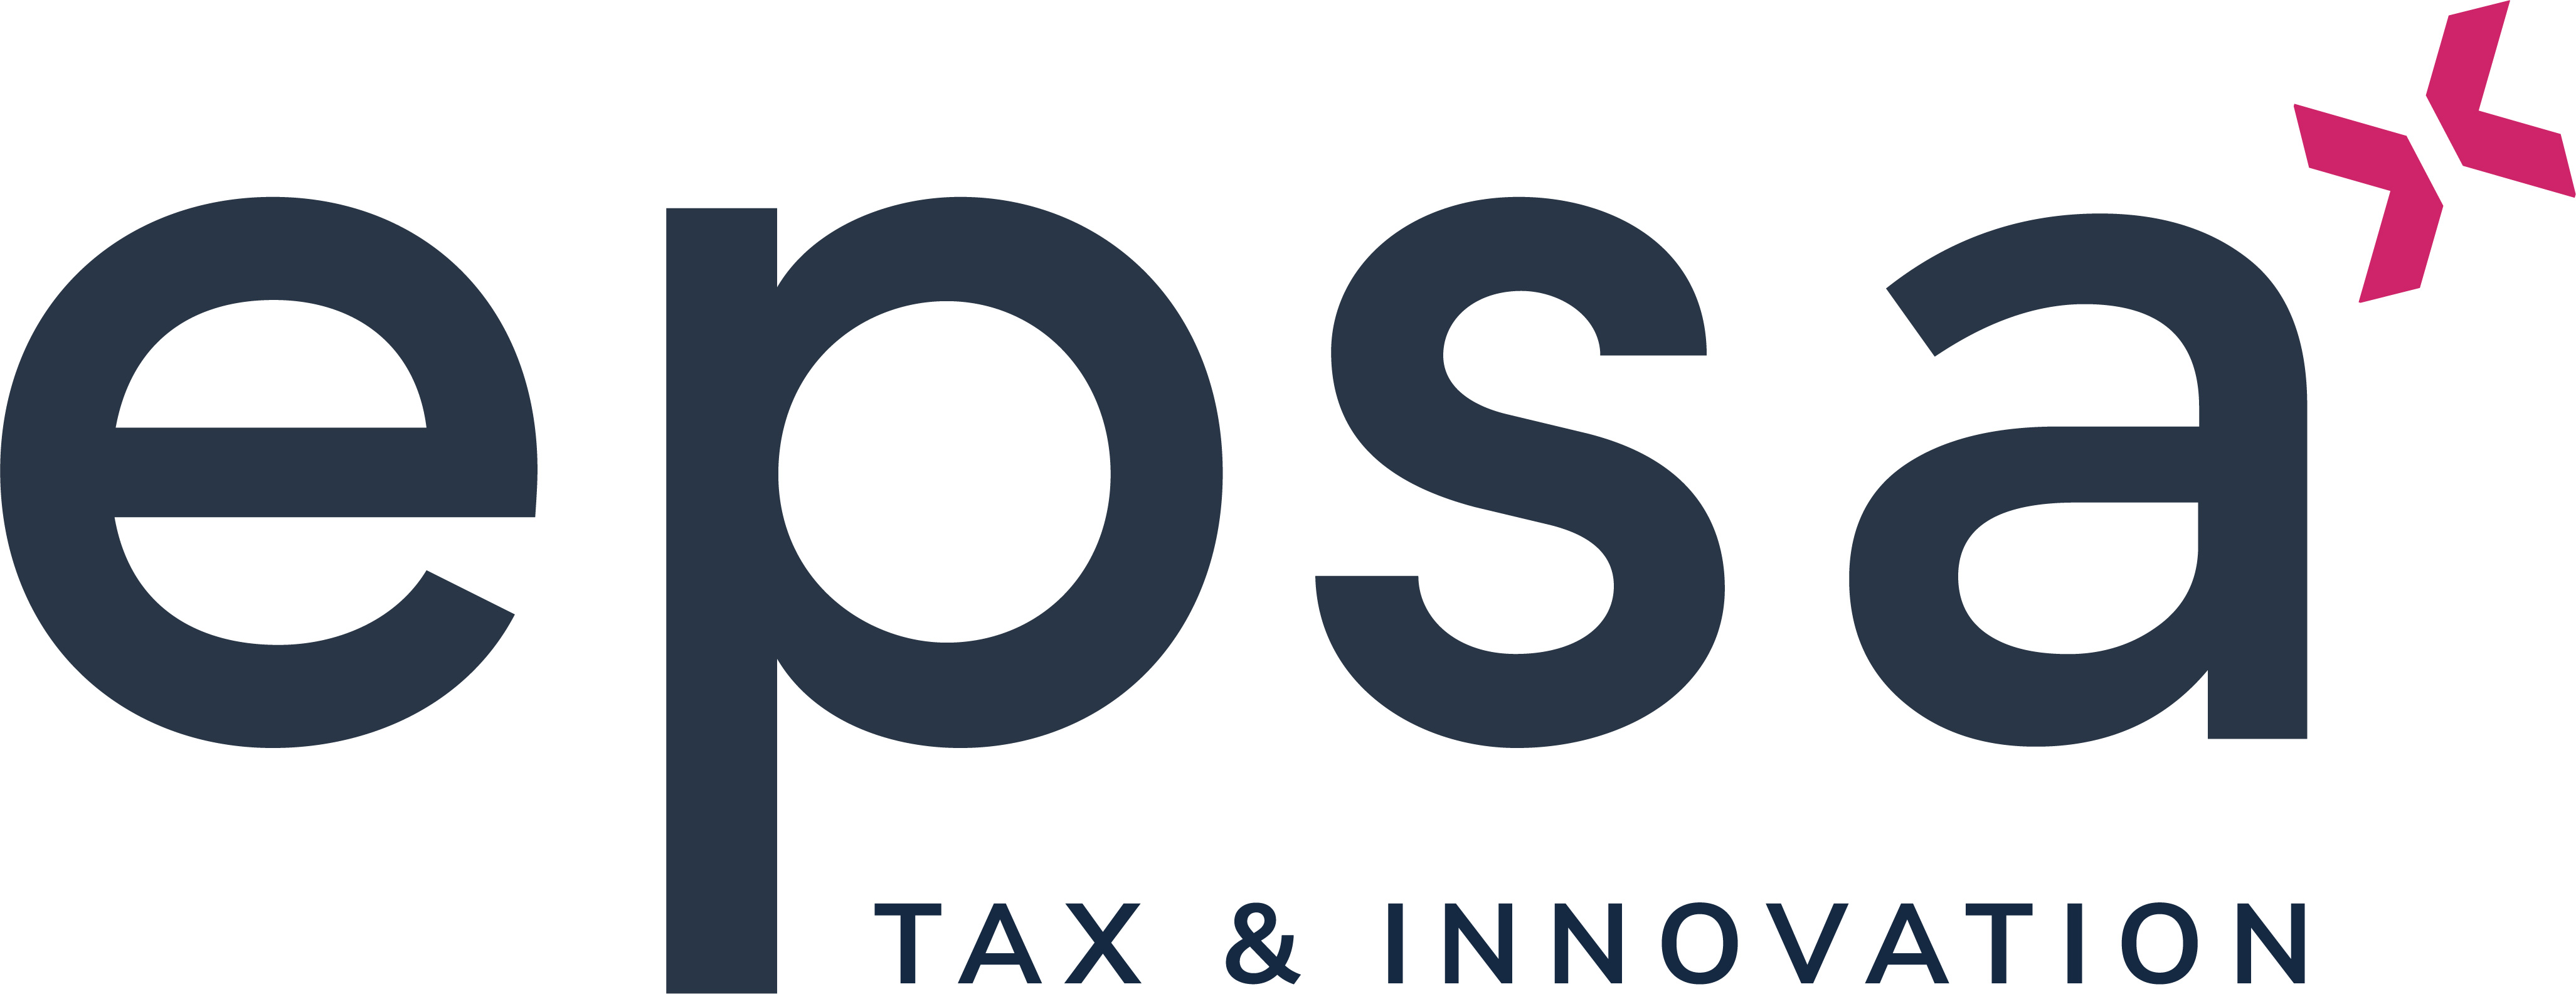 EPSA Tax & innovation 